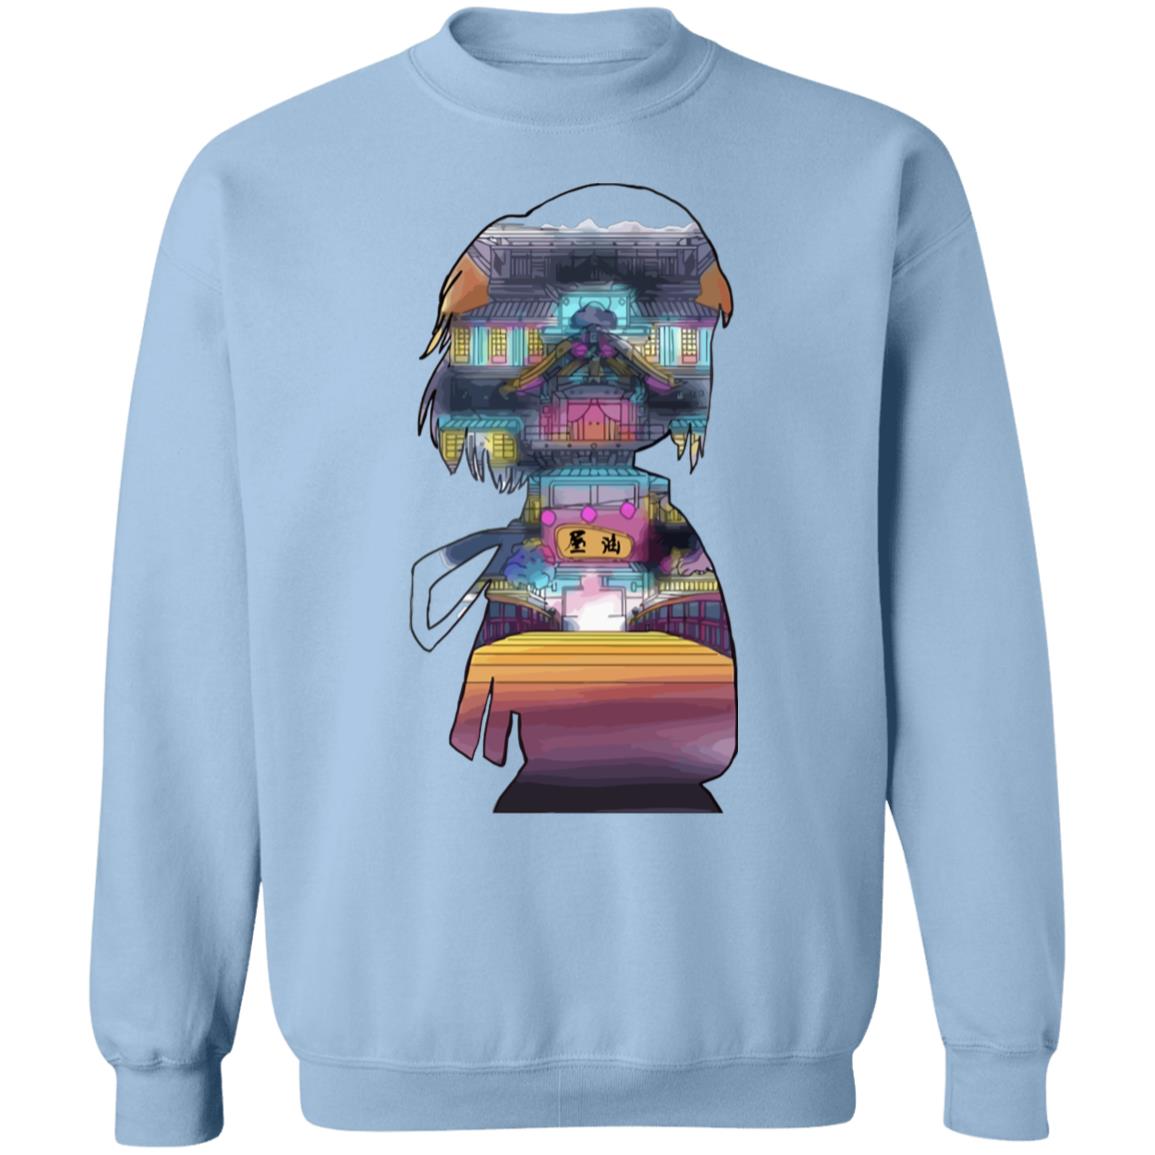 Spirited Away – Sen and The Bathhouse Cutout Colorful Sweatshirt